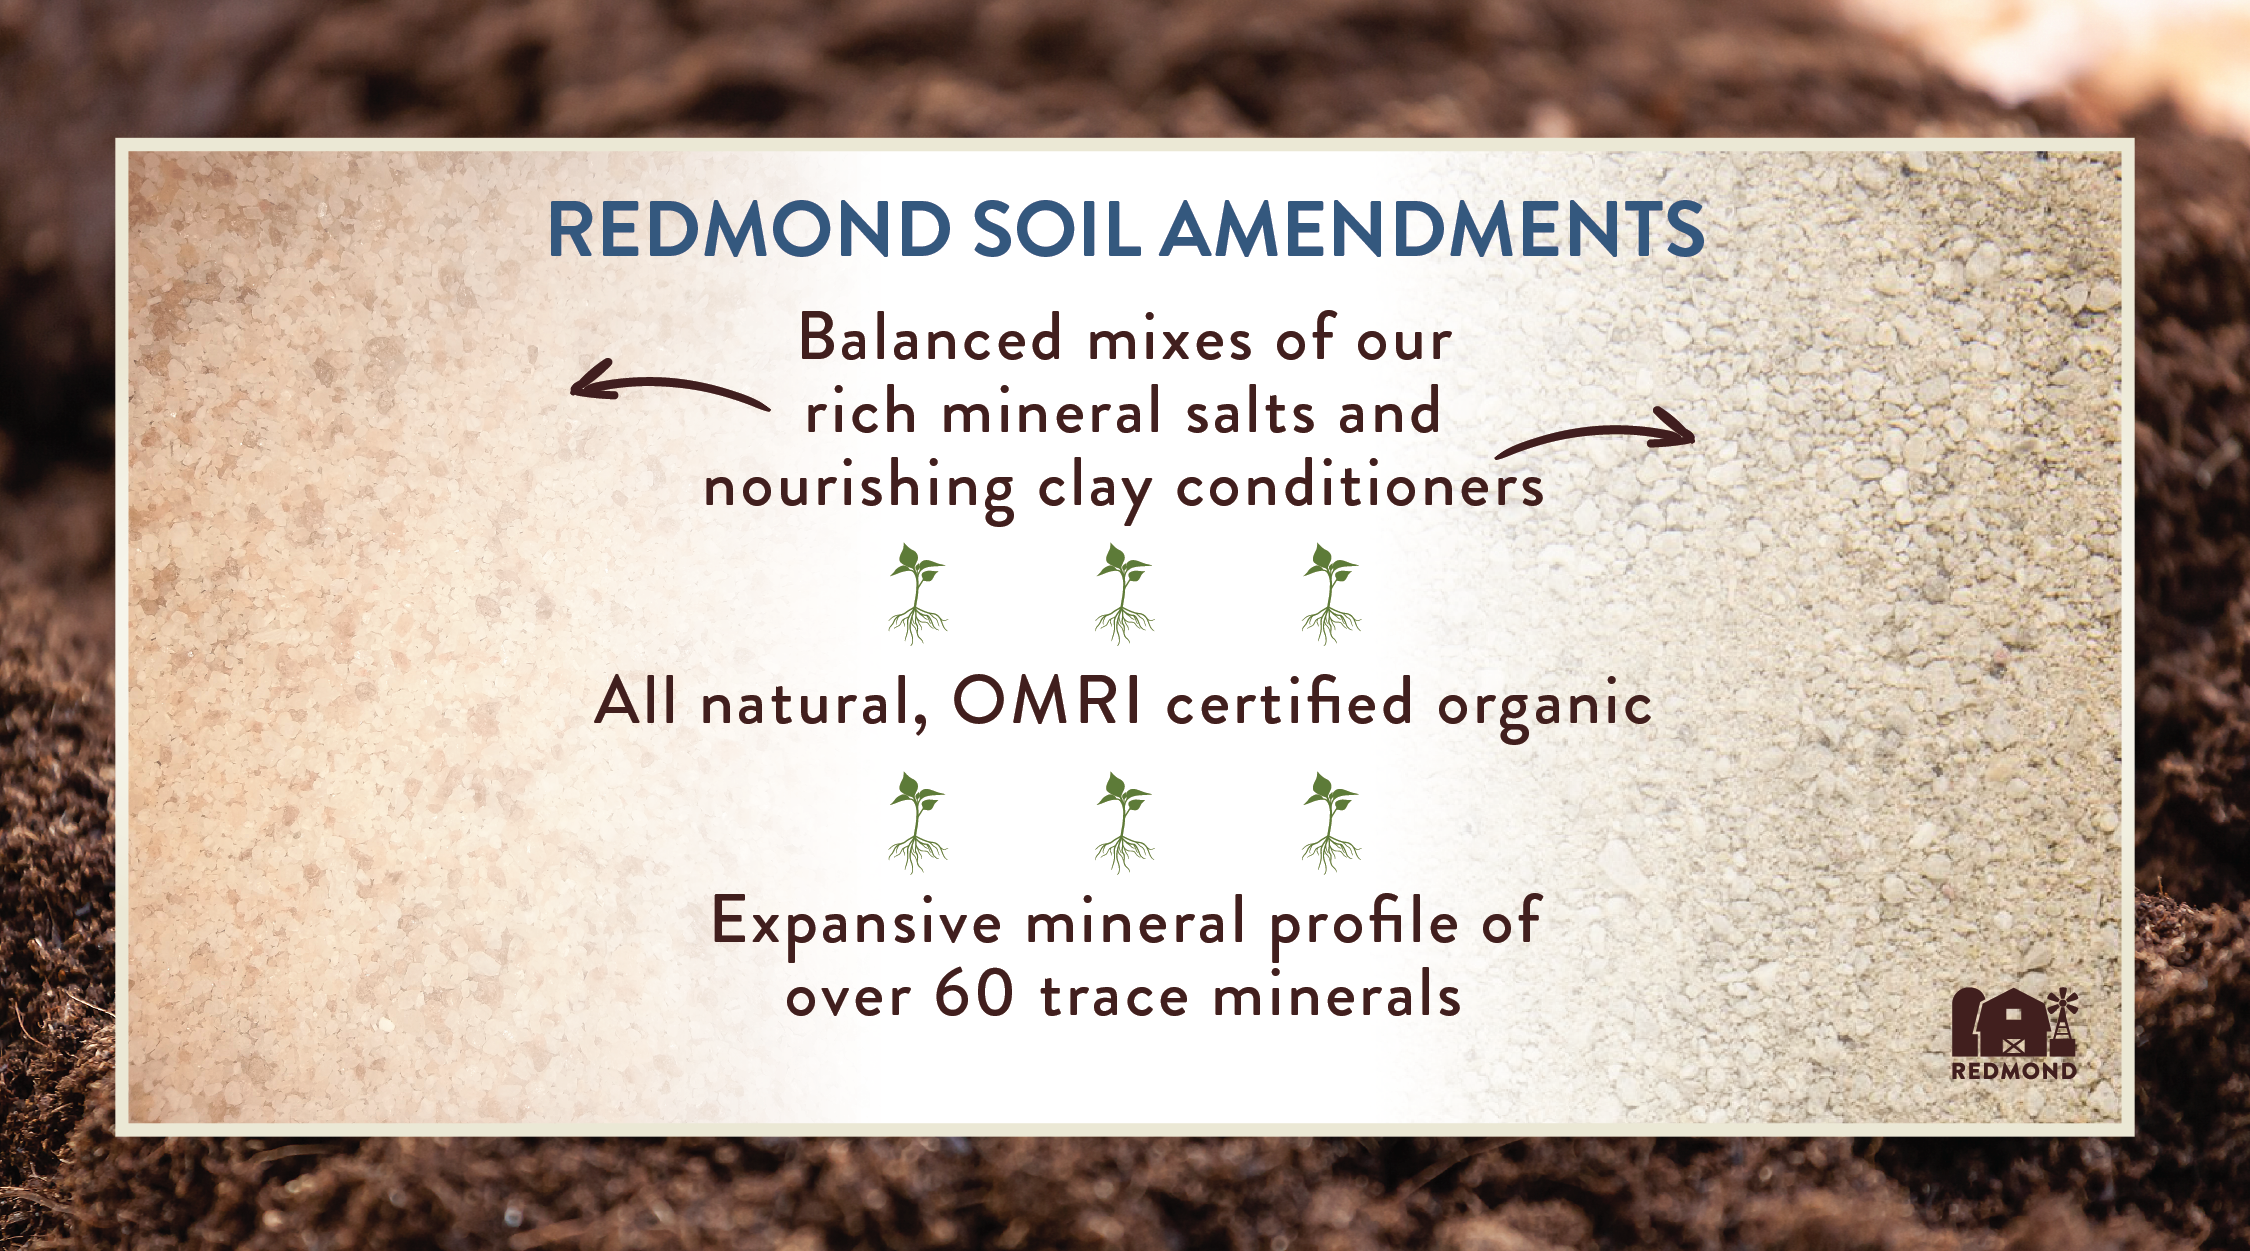 Redmond soil amendments